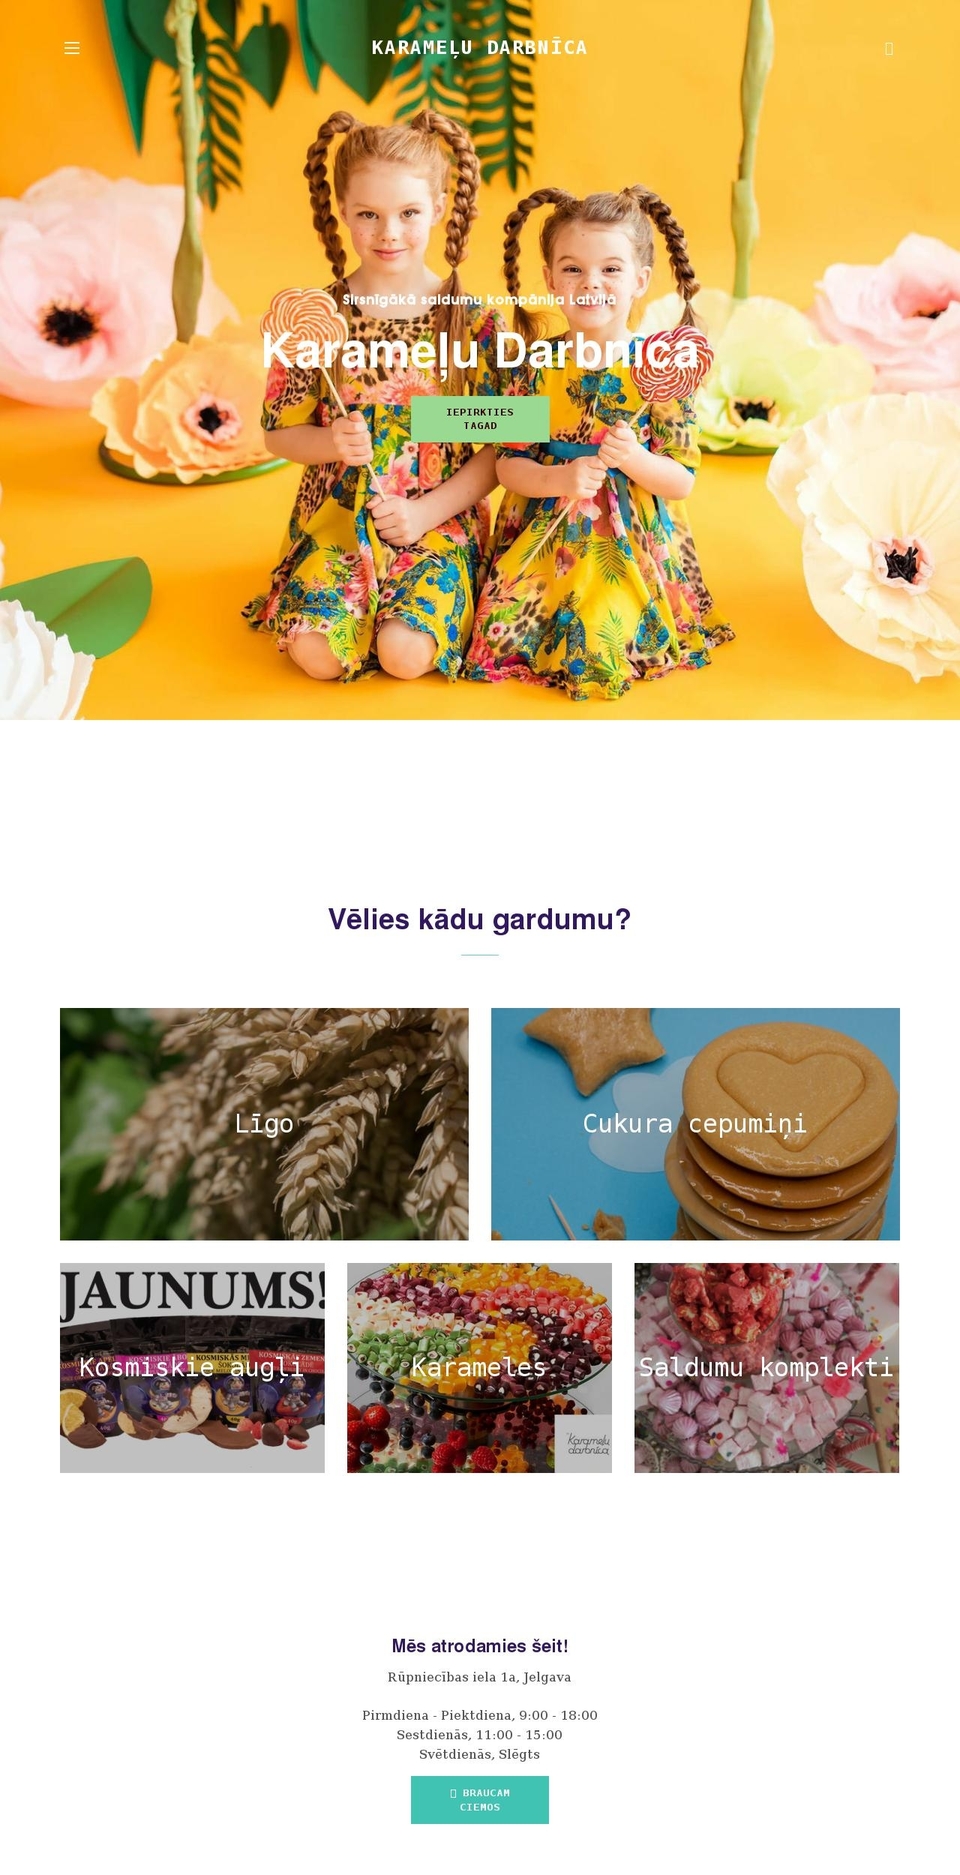 karameludarbnica.lv shopify website screenshot